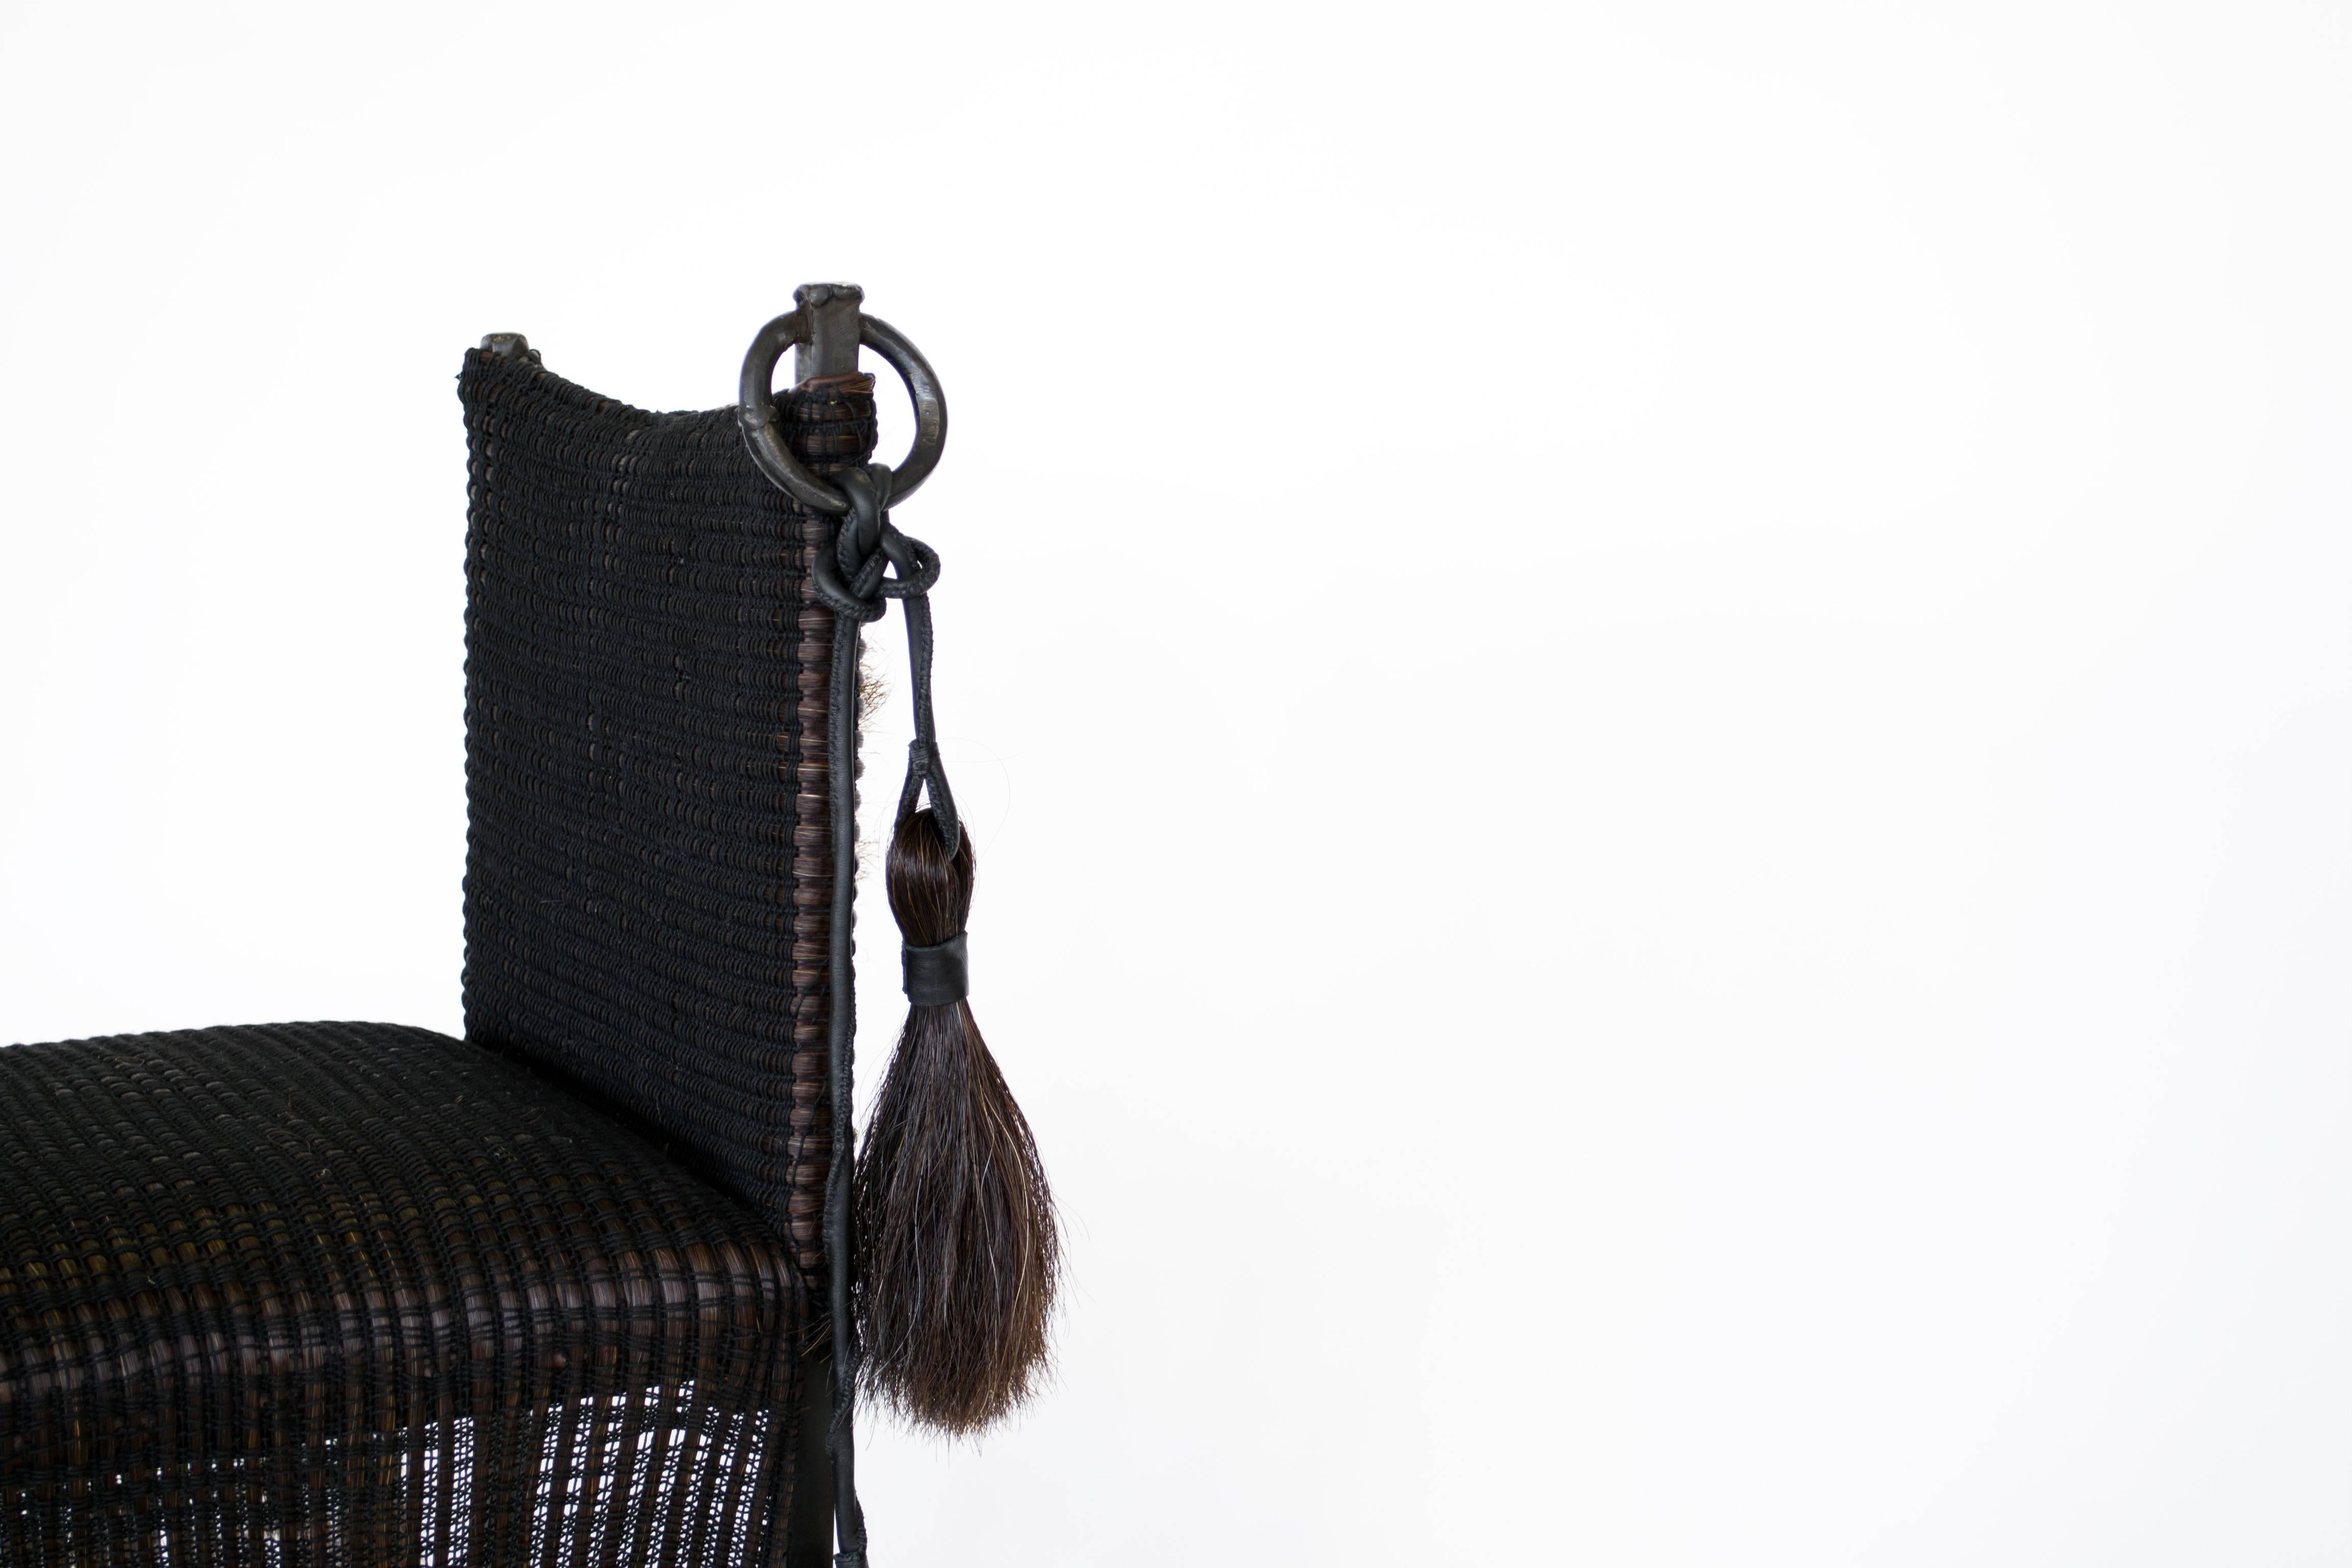 Blackened Handmade Horsehair & Iron Side Chair designed by Alexandra Kohl & J.M. Szymanski